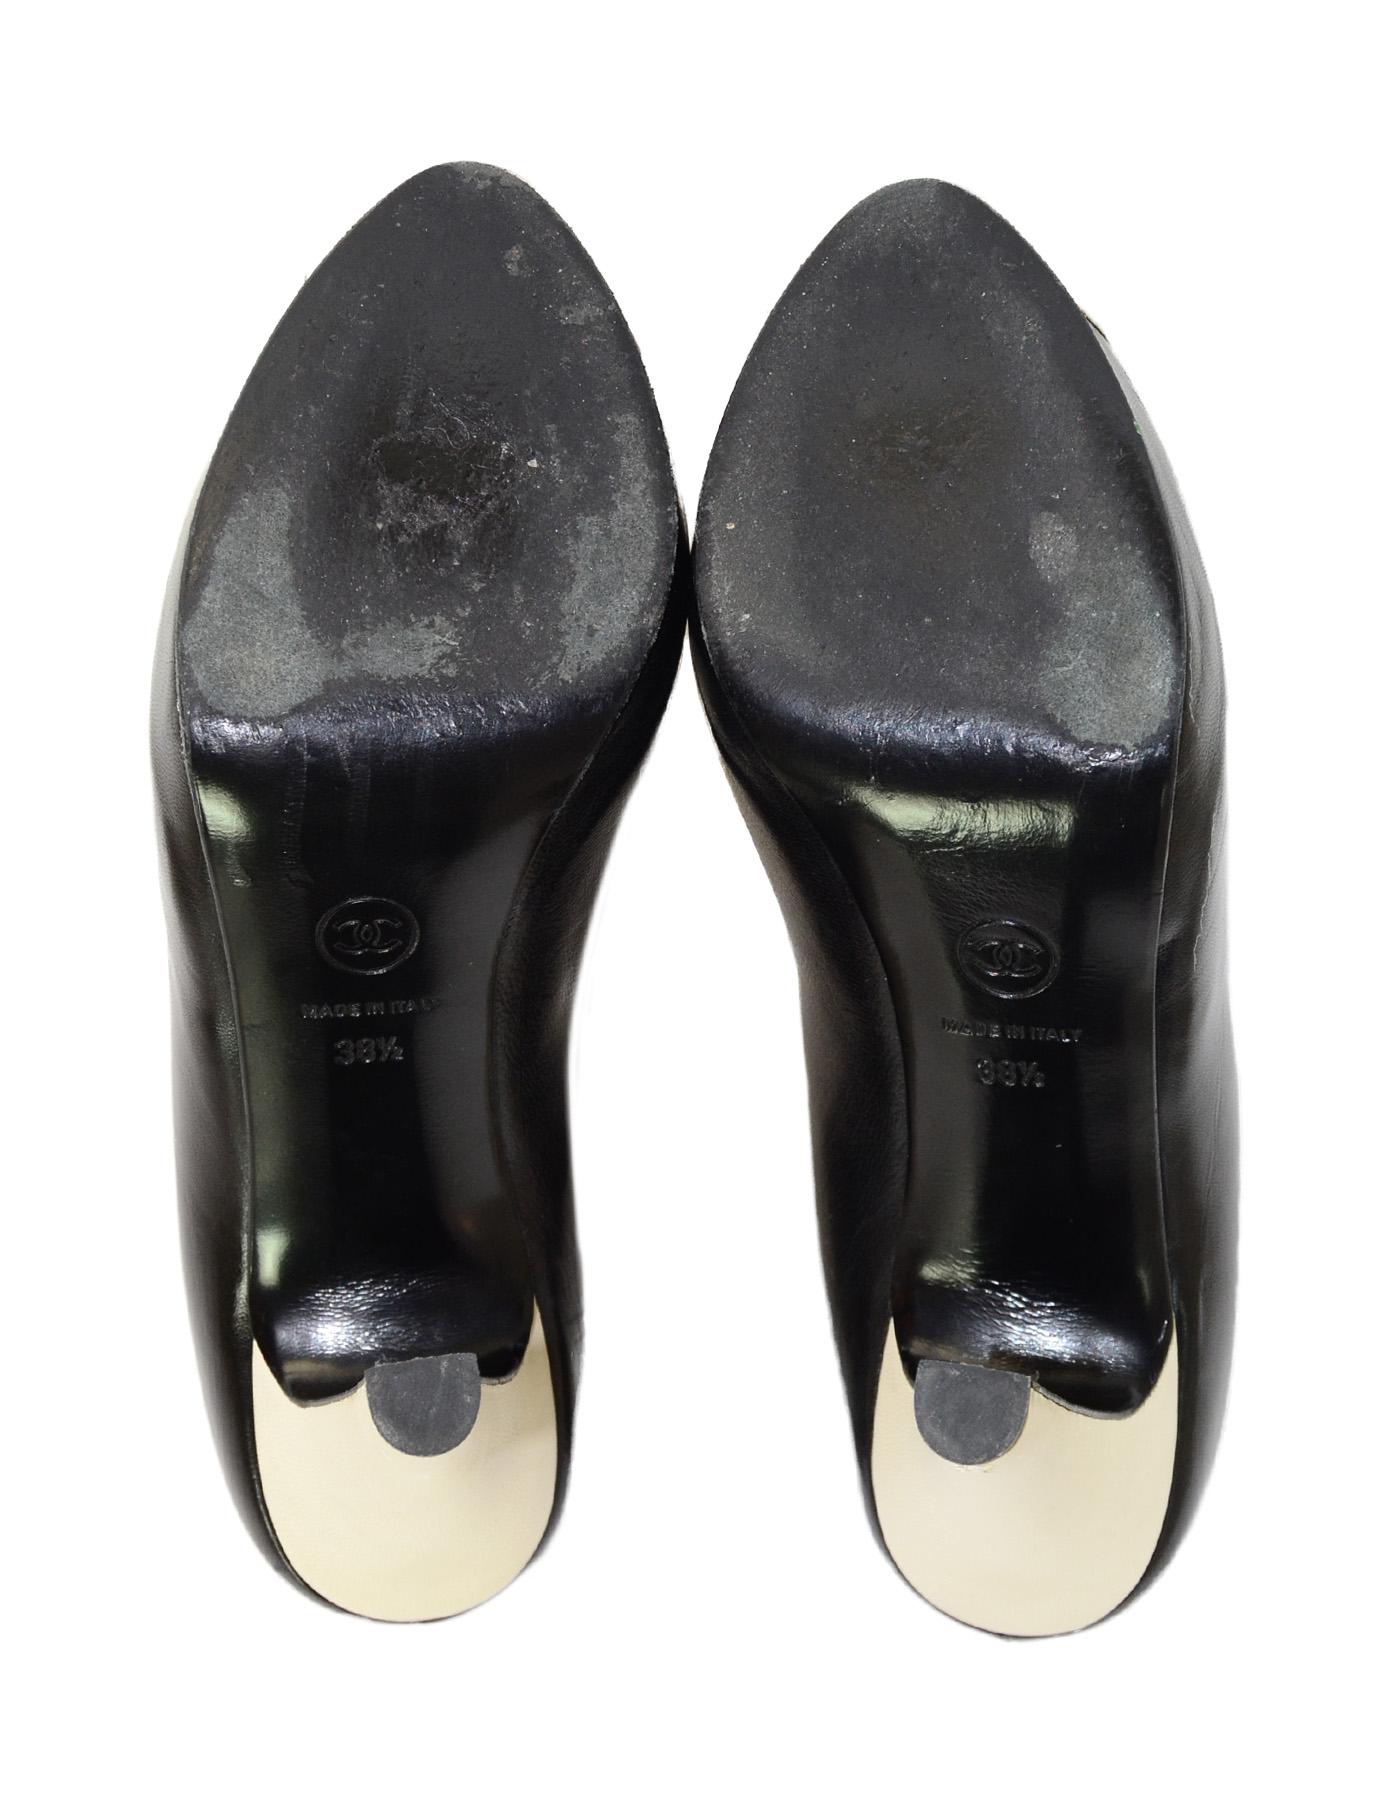 Chanel Black/Ivory Cap Toe CC Platform Pumps W/ Embroidered CC At Toes Sz 38.5 2